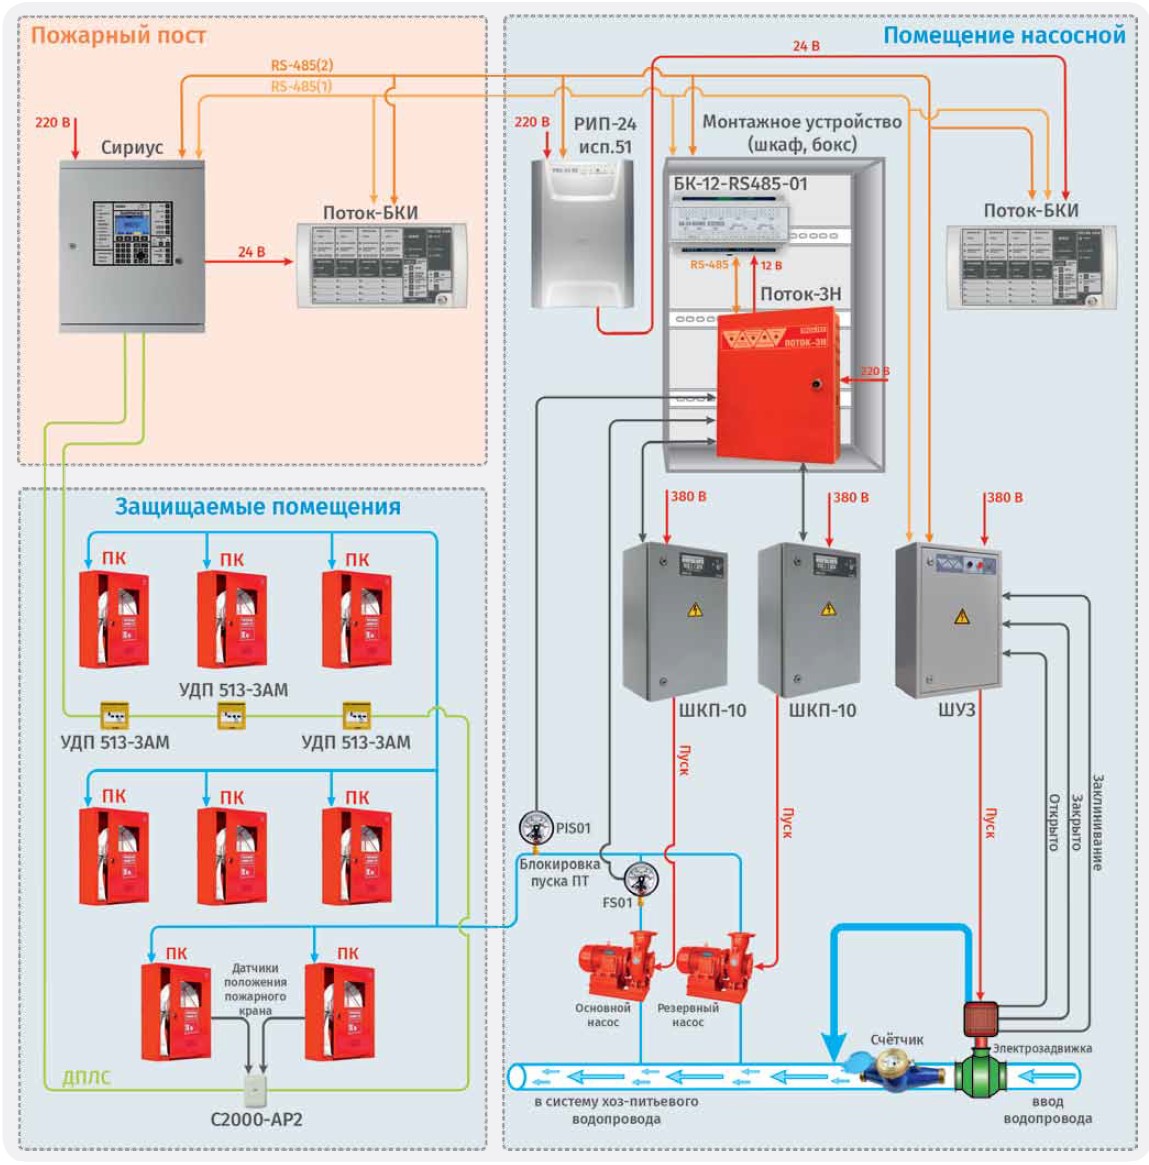 Поток-БКИ в системе противопожарного водопровода